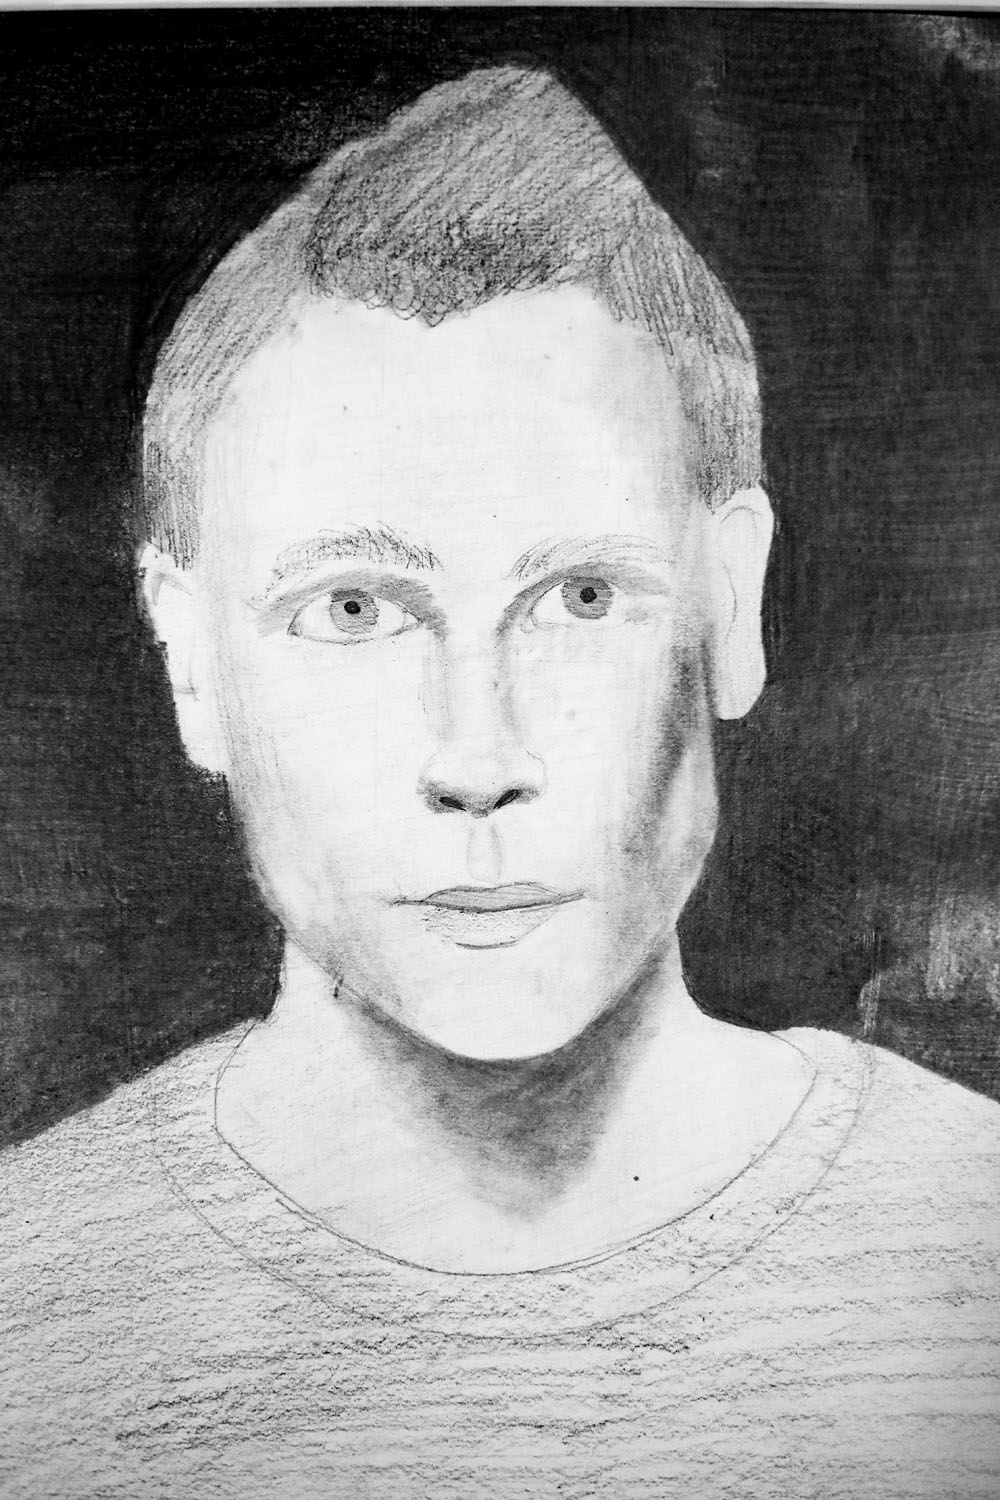 Pencil drawing of man with short hair